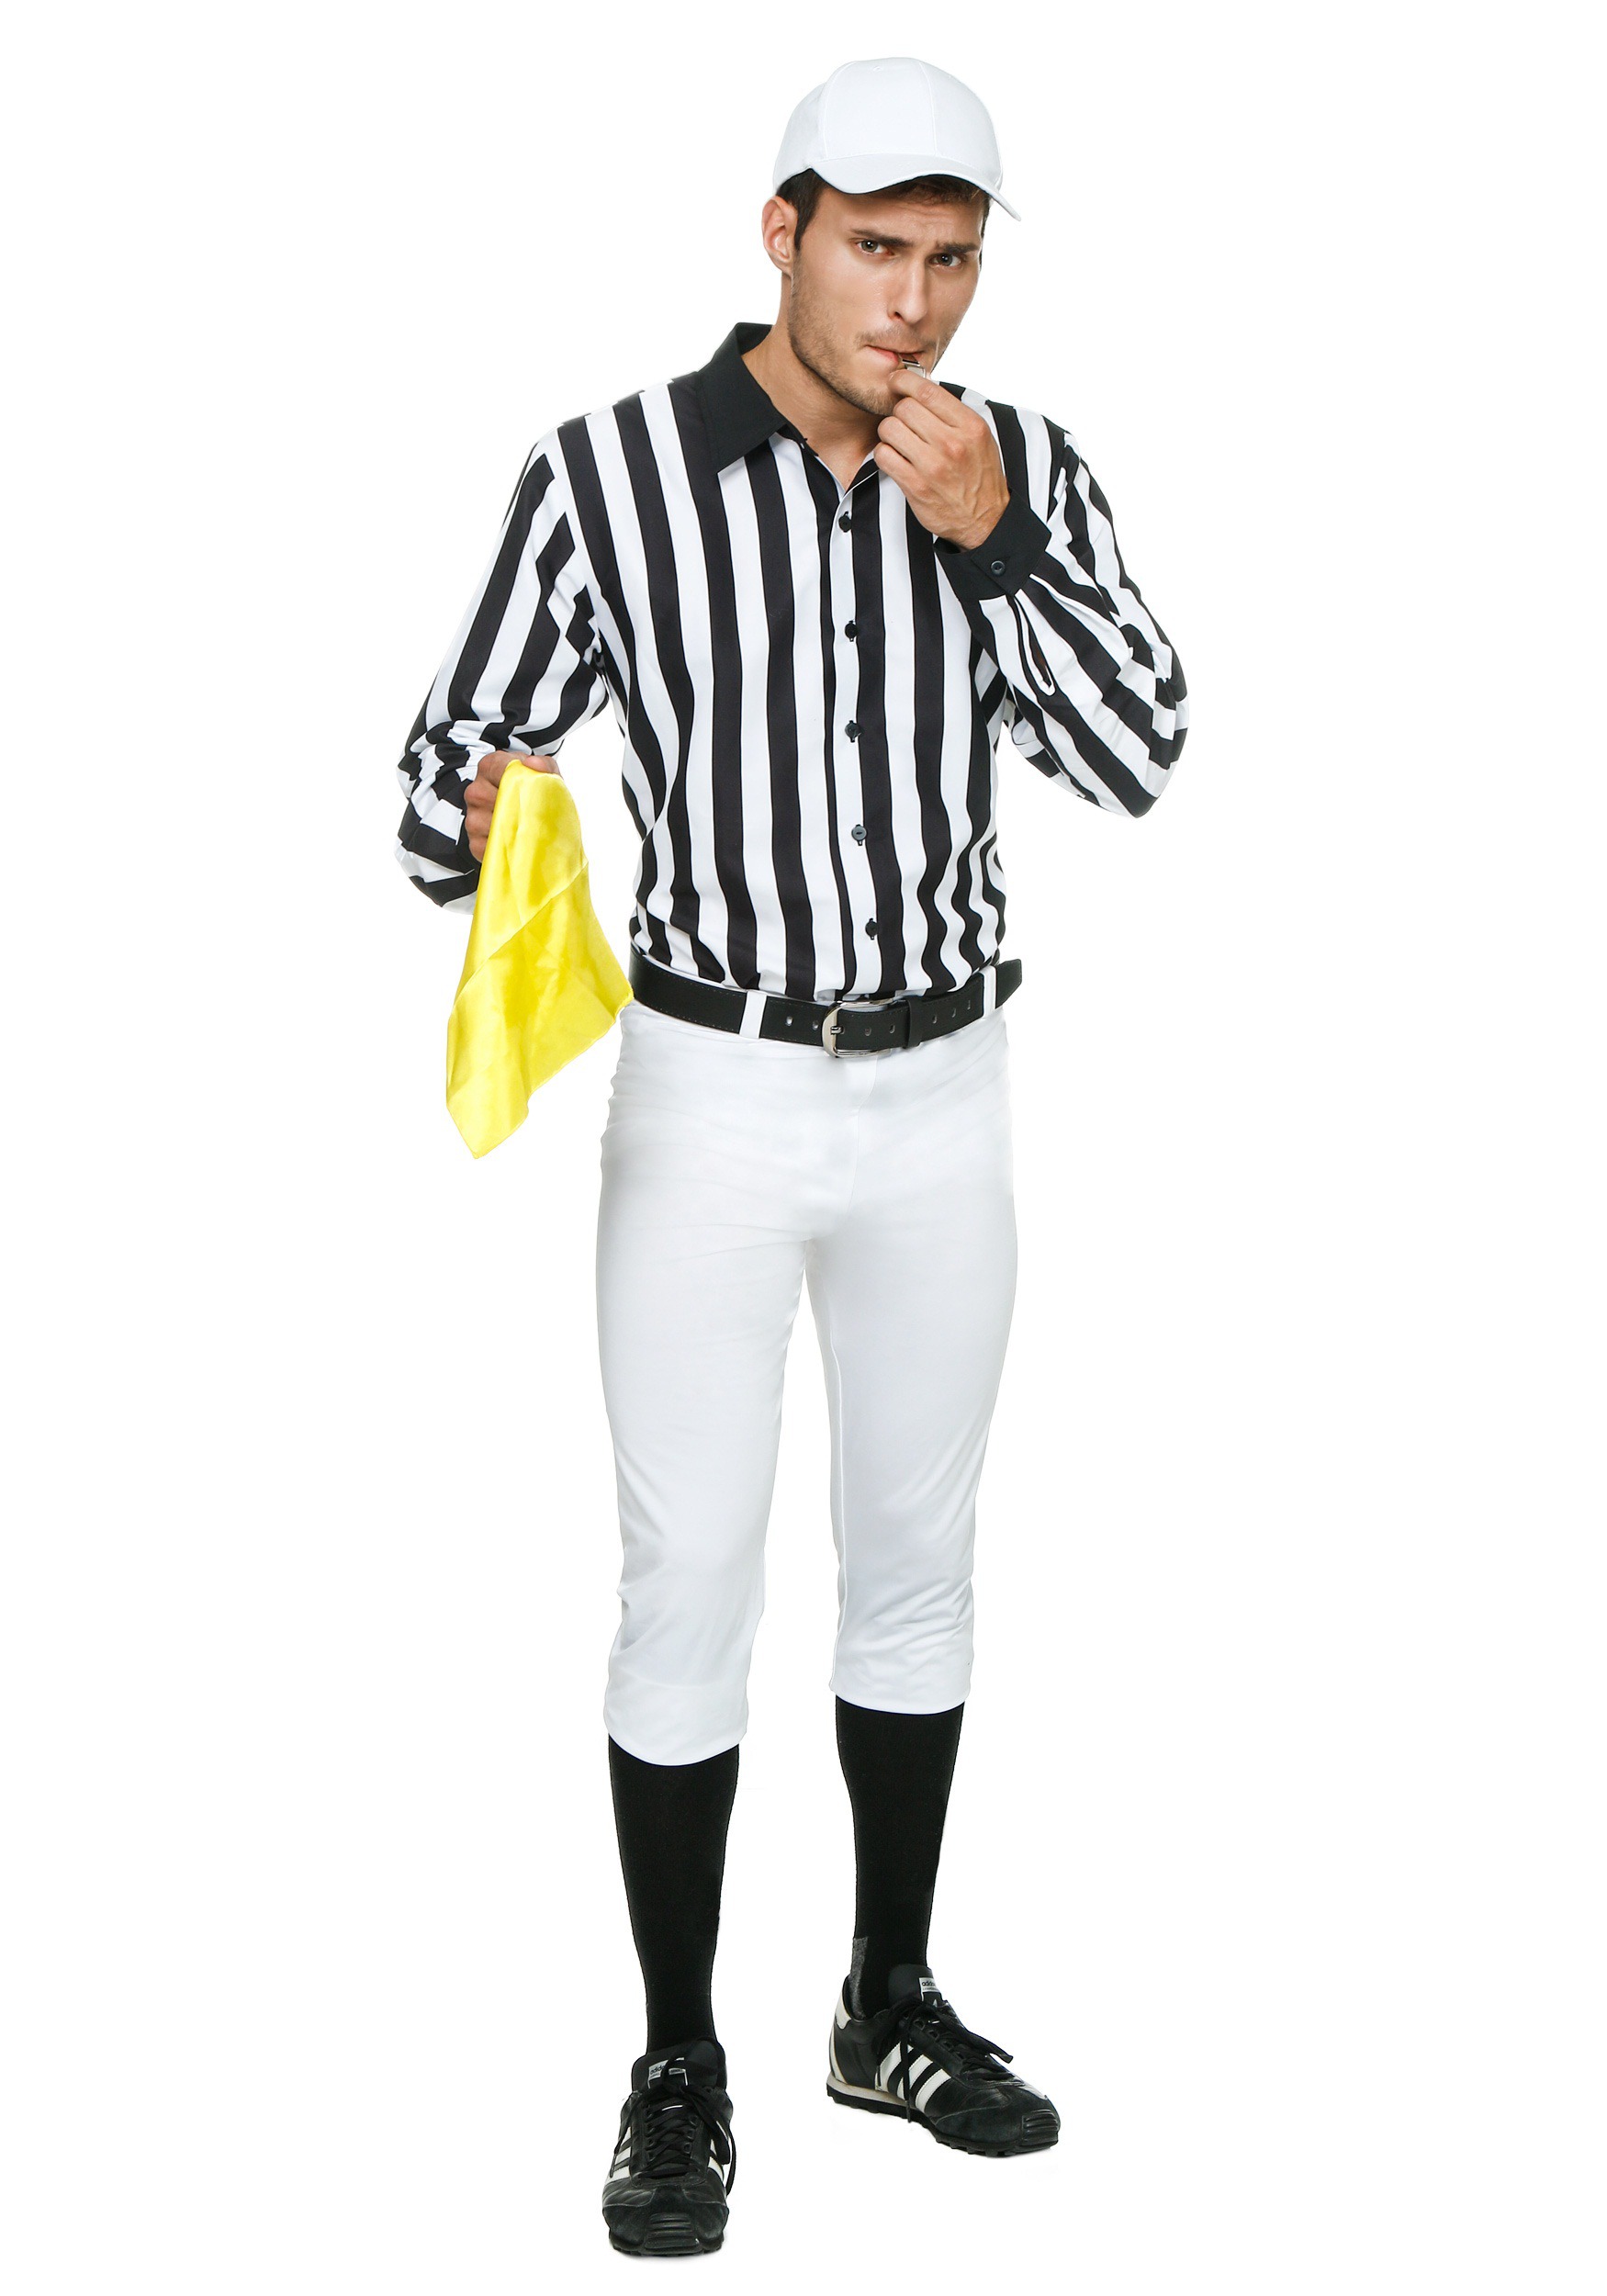 Adult Referee Fancy Dress Costume